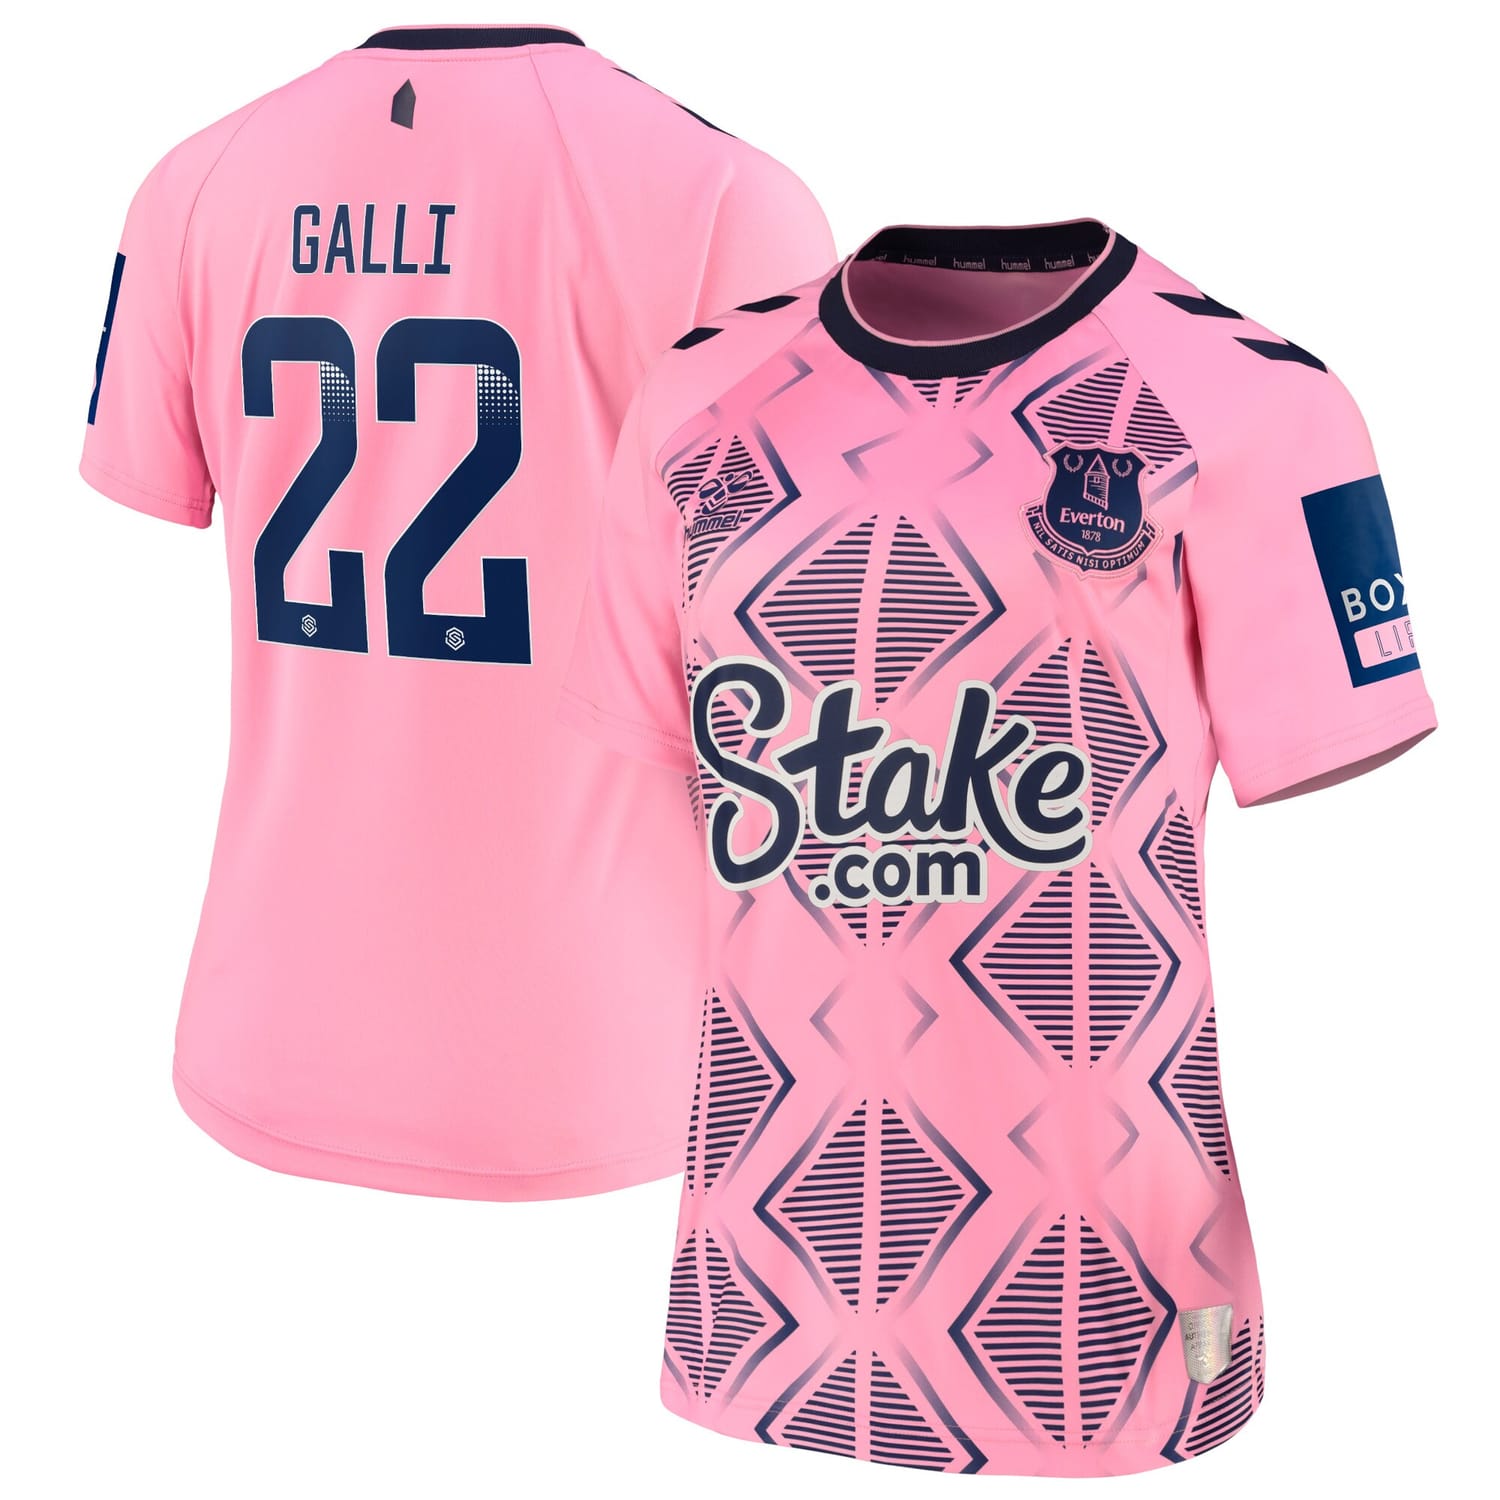 Premier League Everton Away Jersey Shirt 2022-23 player Aurora Galli 22 printing for Women